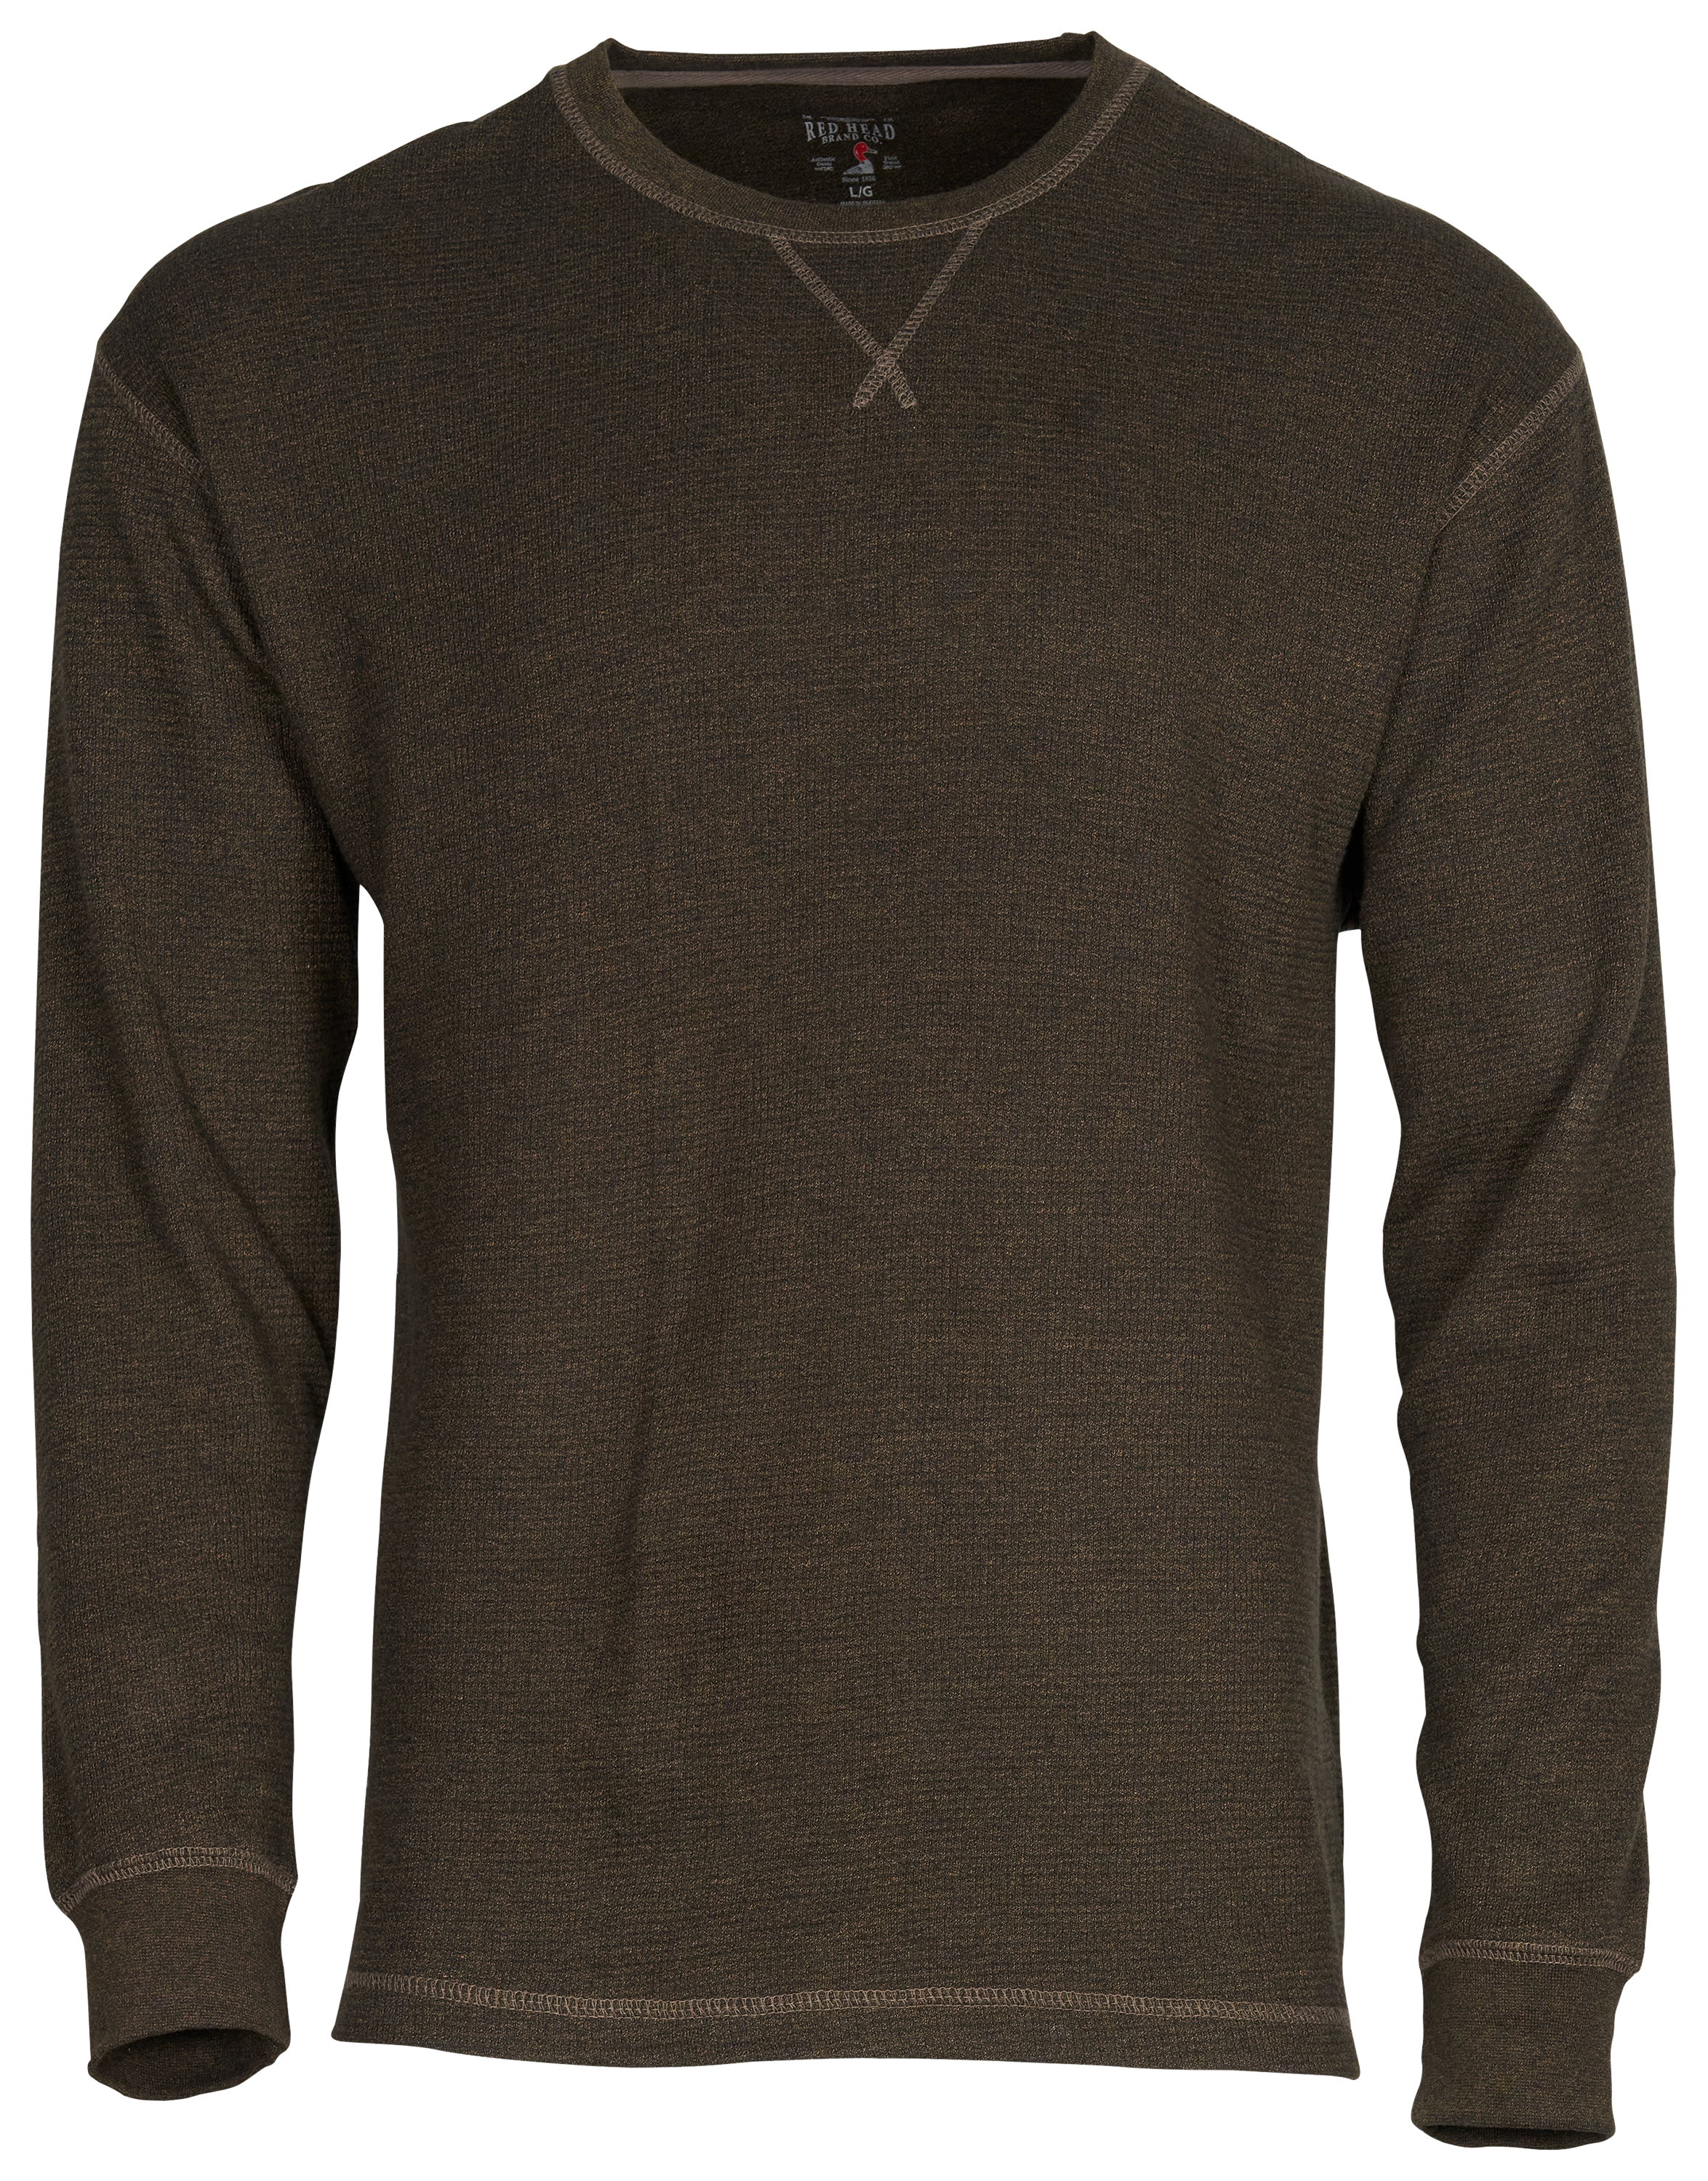 Waffle Knit Thermal Crewneck Shirt – The American Outdoorsman